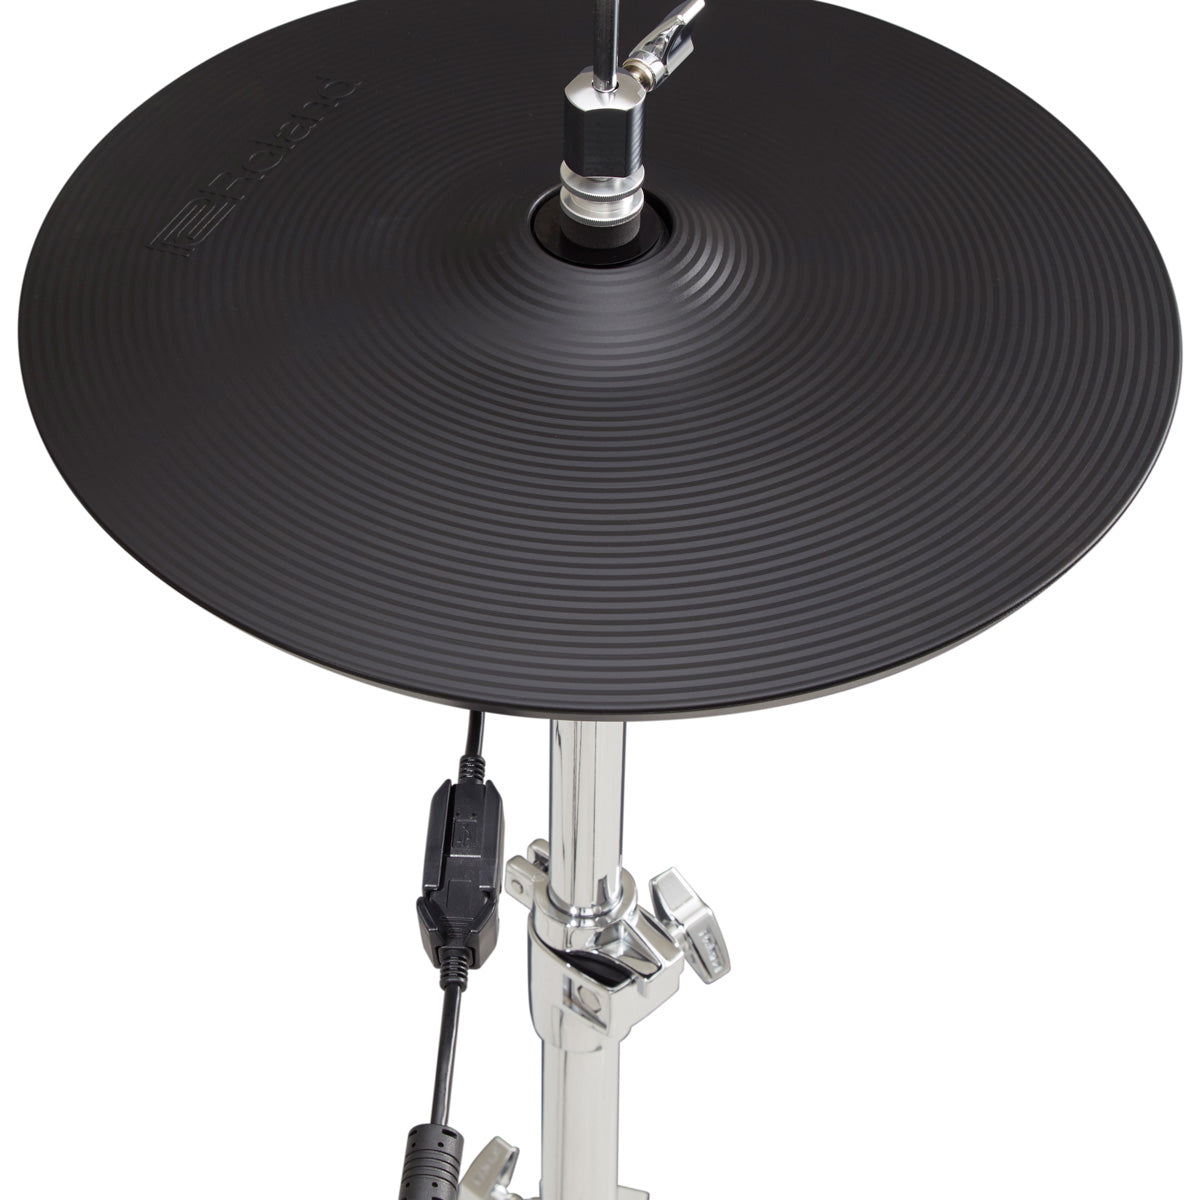 Roland VH-14D Digital Hi-Hat Cymbal Pads - 14 in.